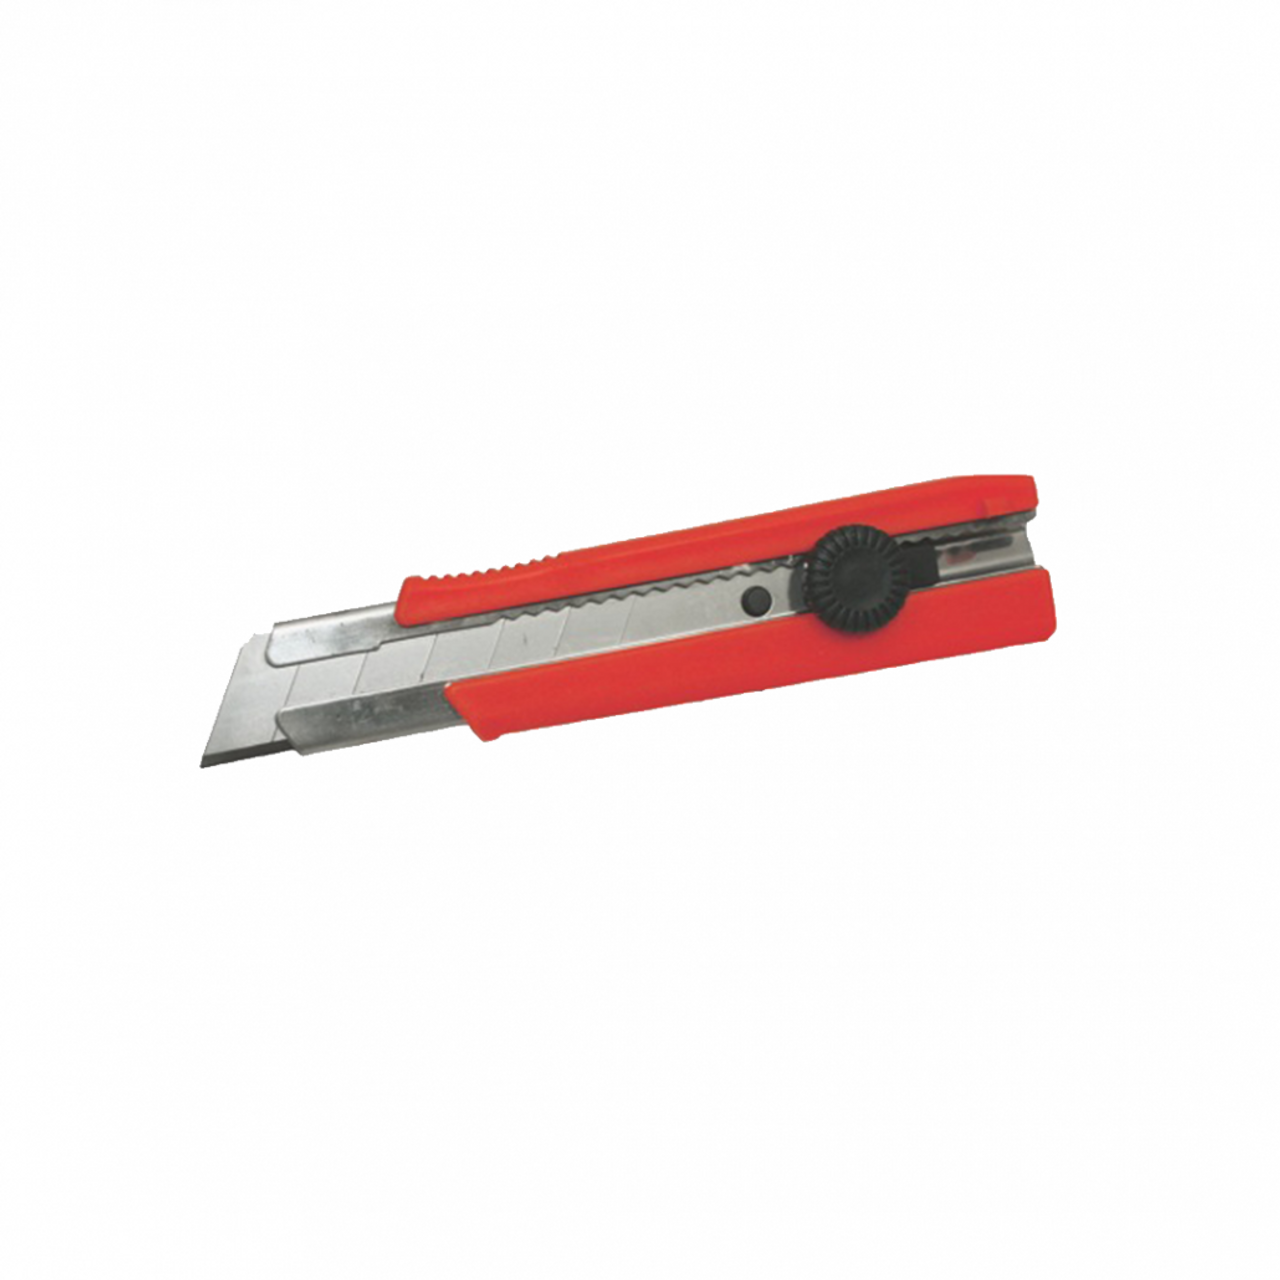 Plumtool Tradesman Knife Extendable